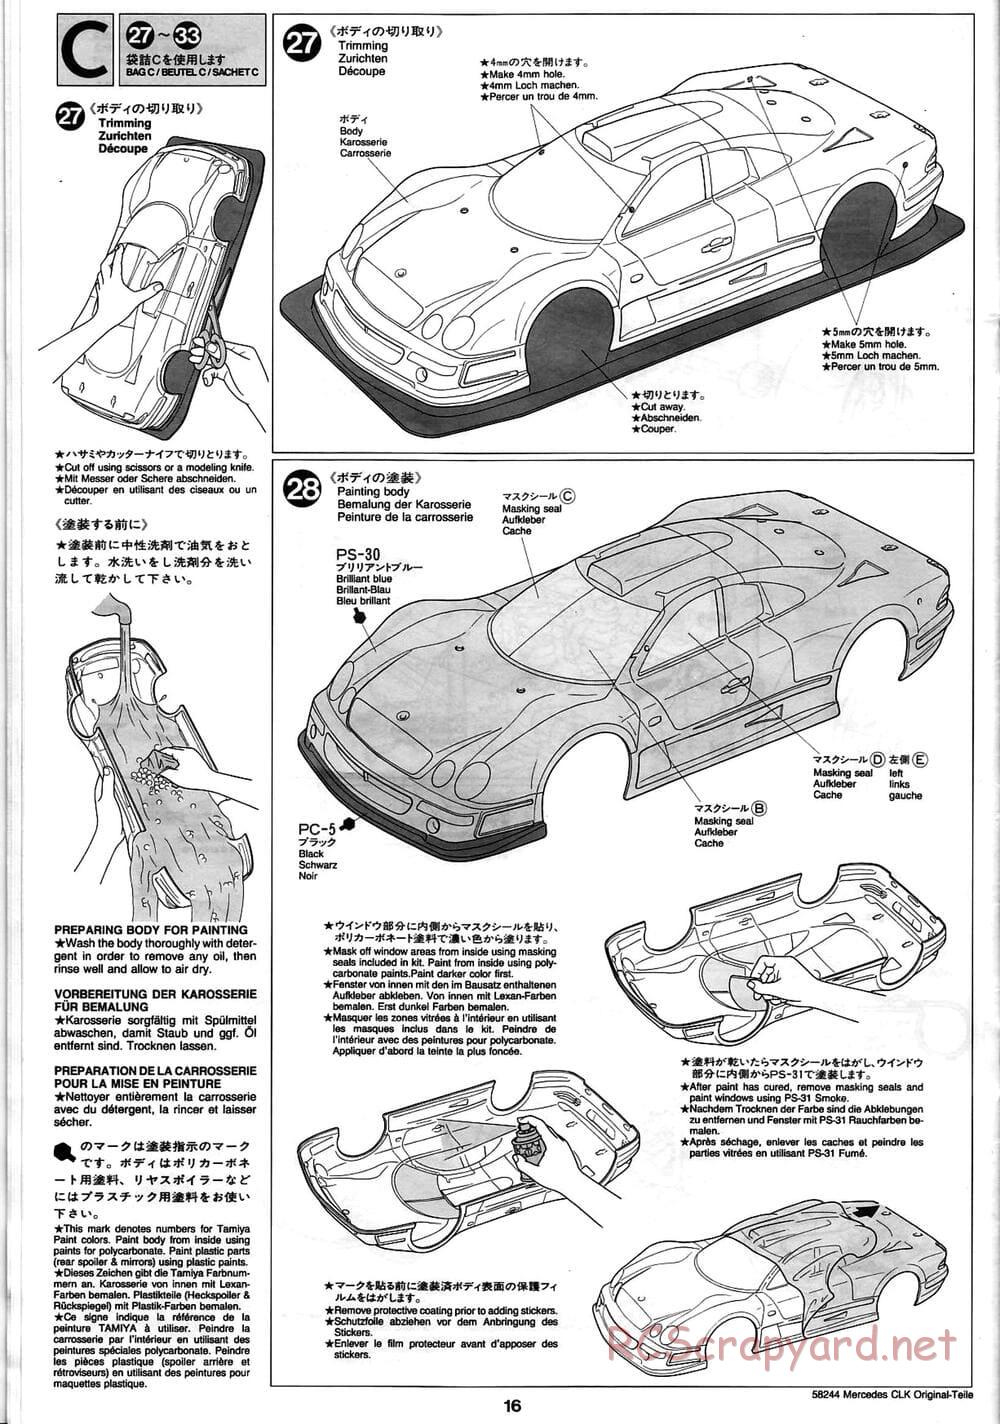 Tamiya - Mercedes CLK-GTR Original-Teile - TL-01 Chassis - Manual - Page 16